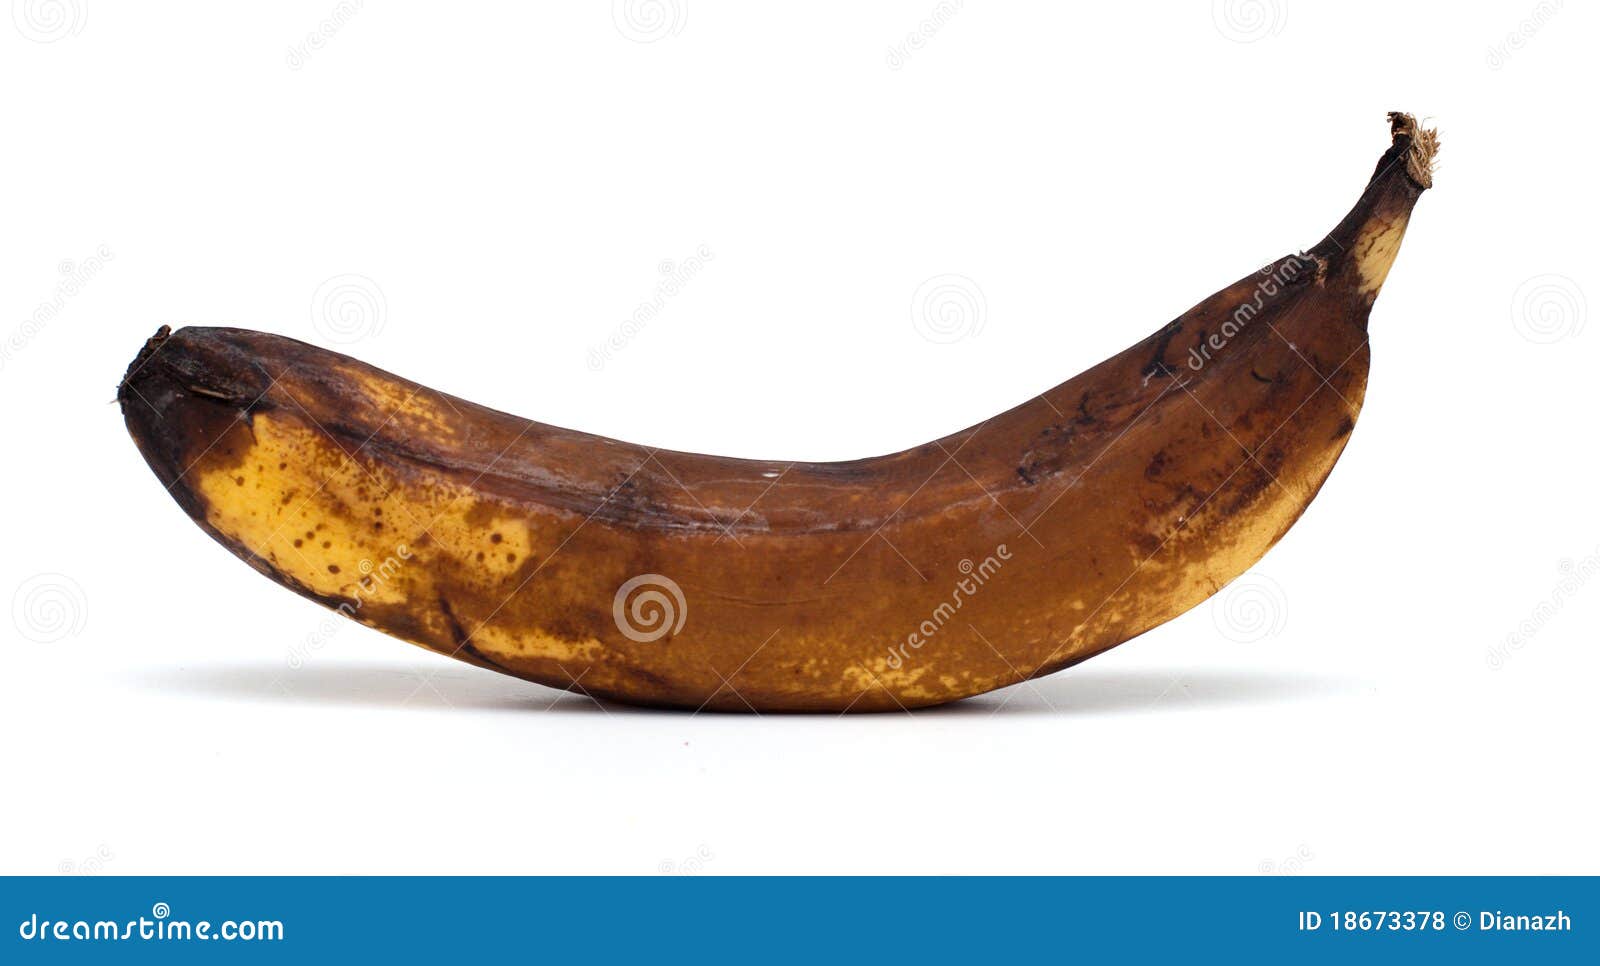 old-banana-18673378.jpg